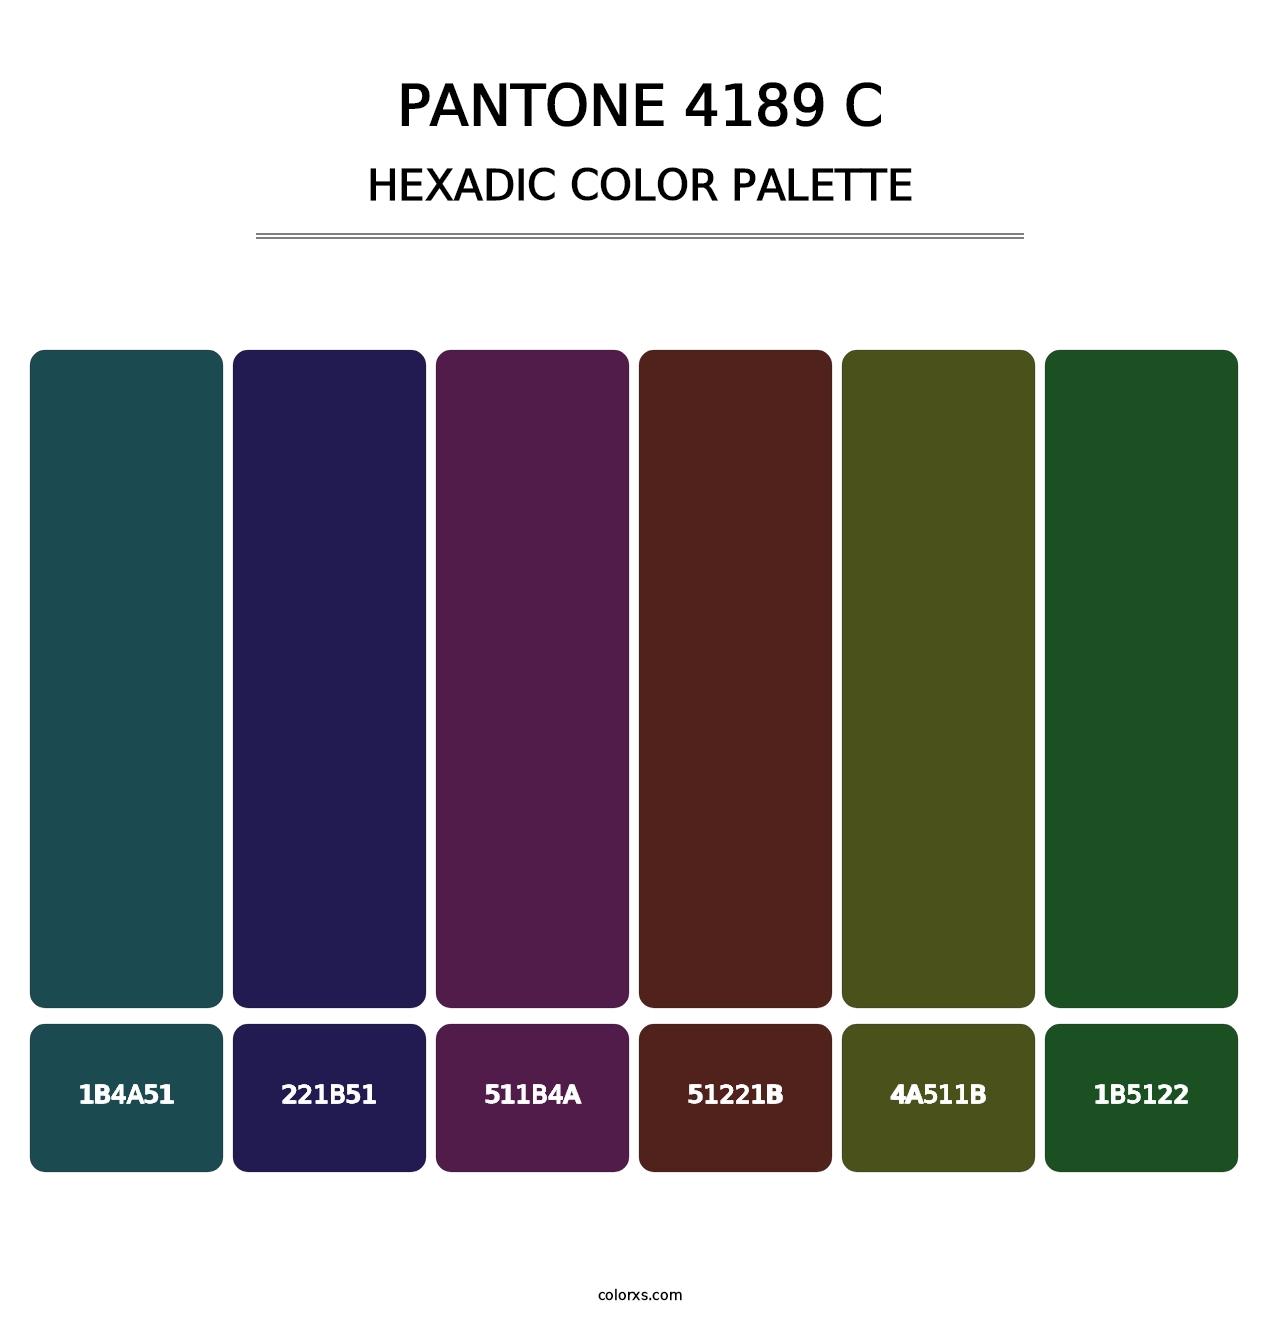 PANTONE 4189 C - Hexadic Color Palette